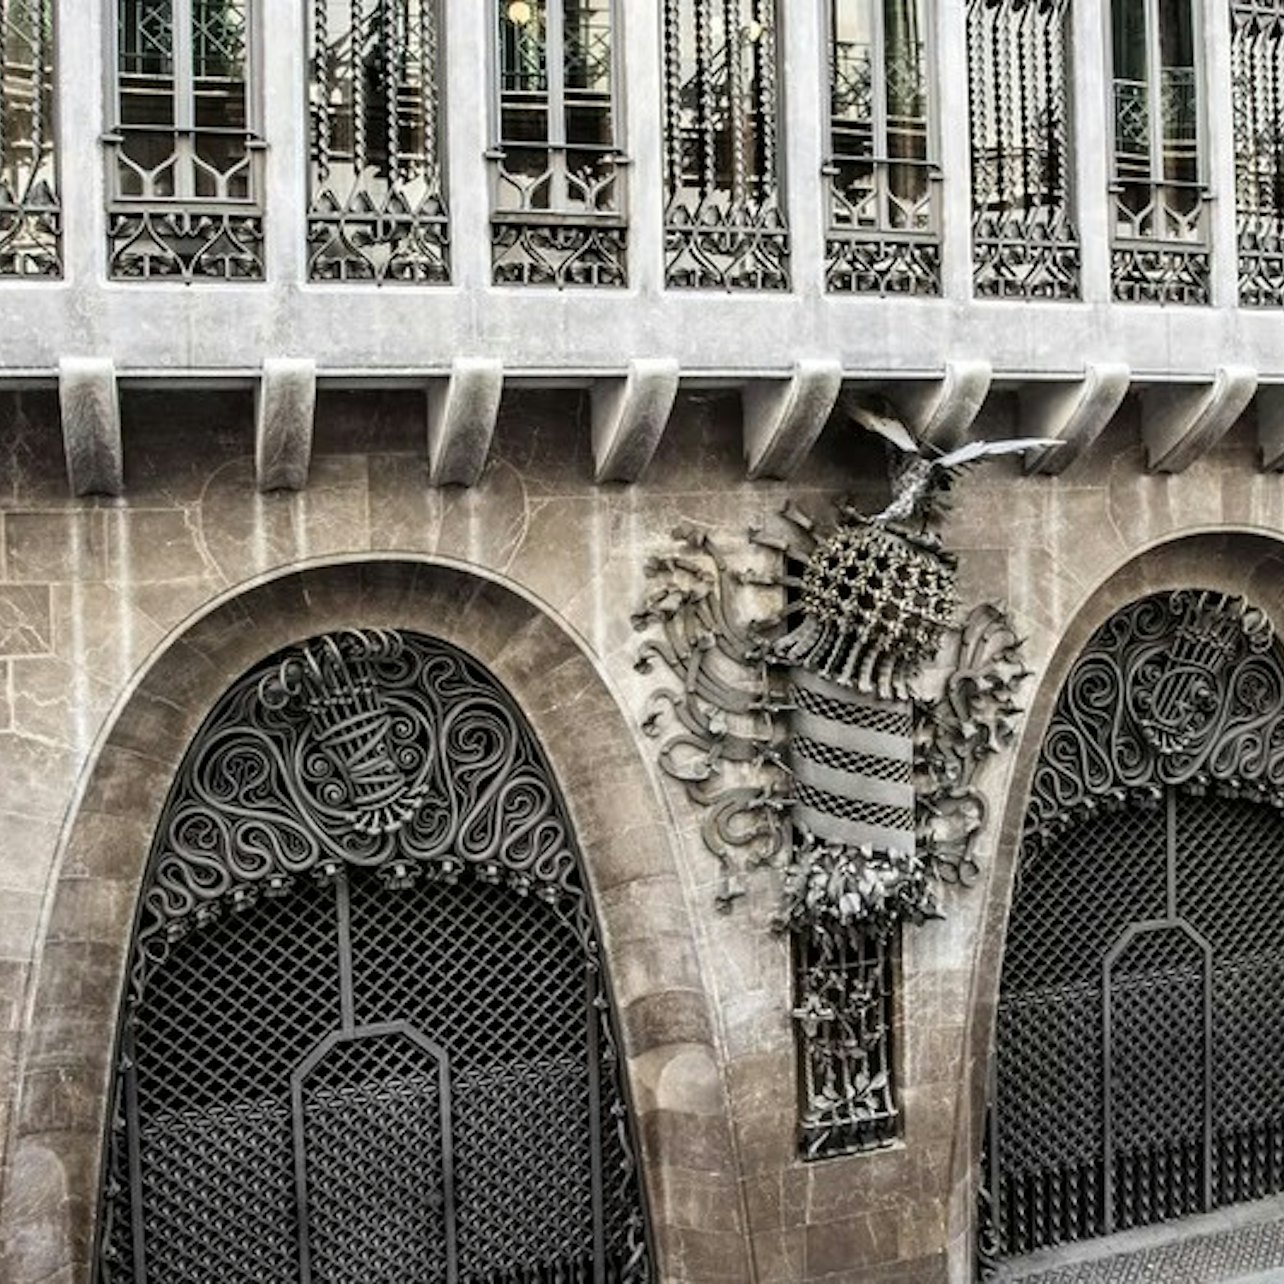 Palau Güell (Güell Palace): Guided Tour - Accommodations in Barcelona